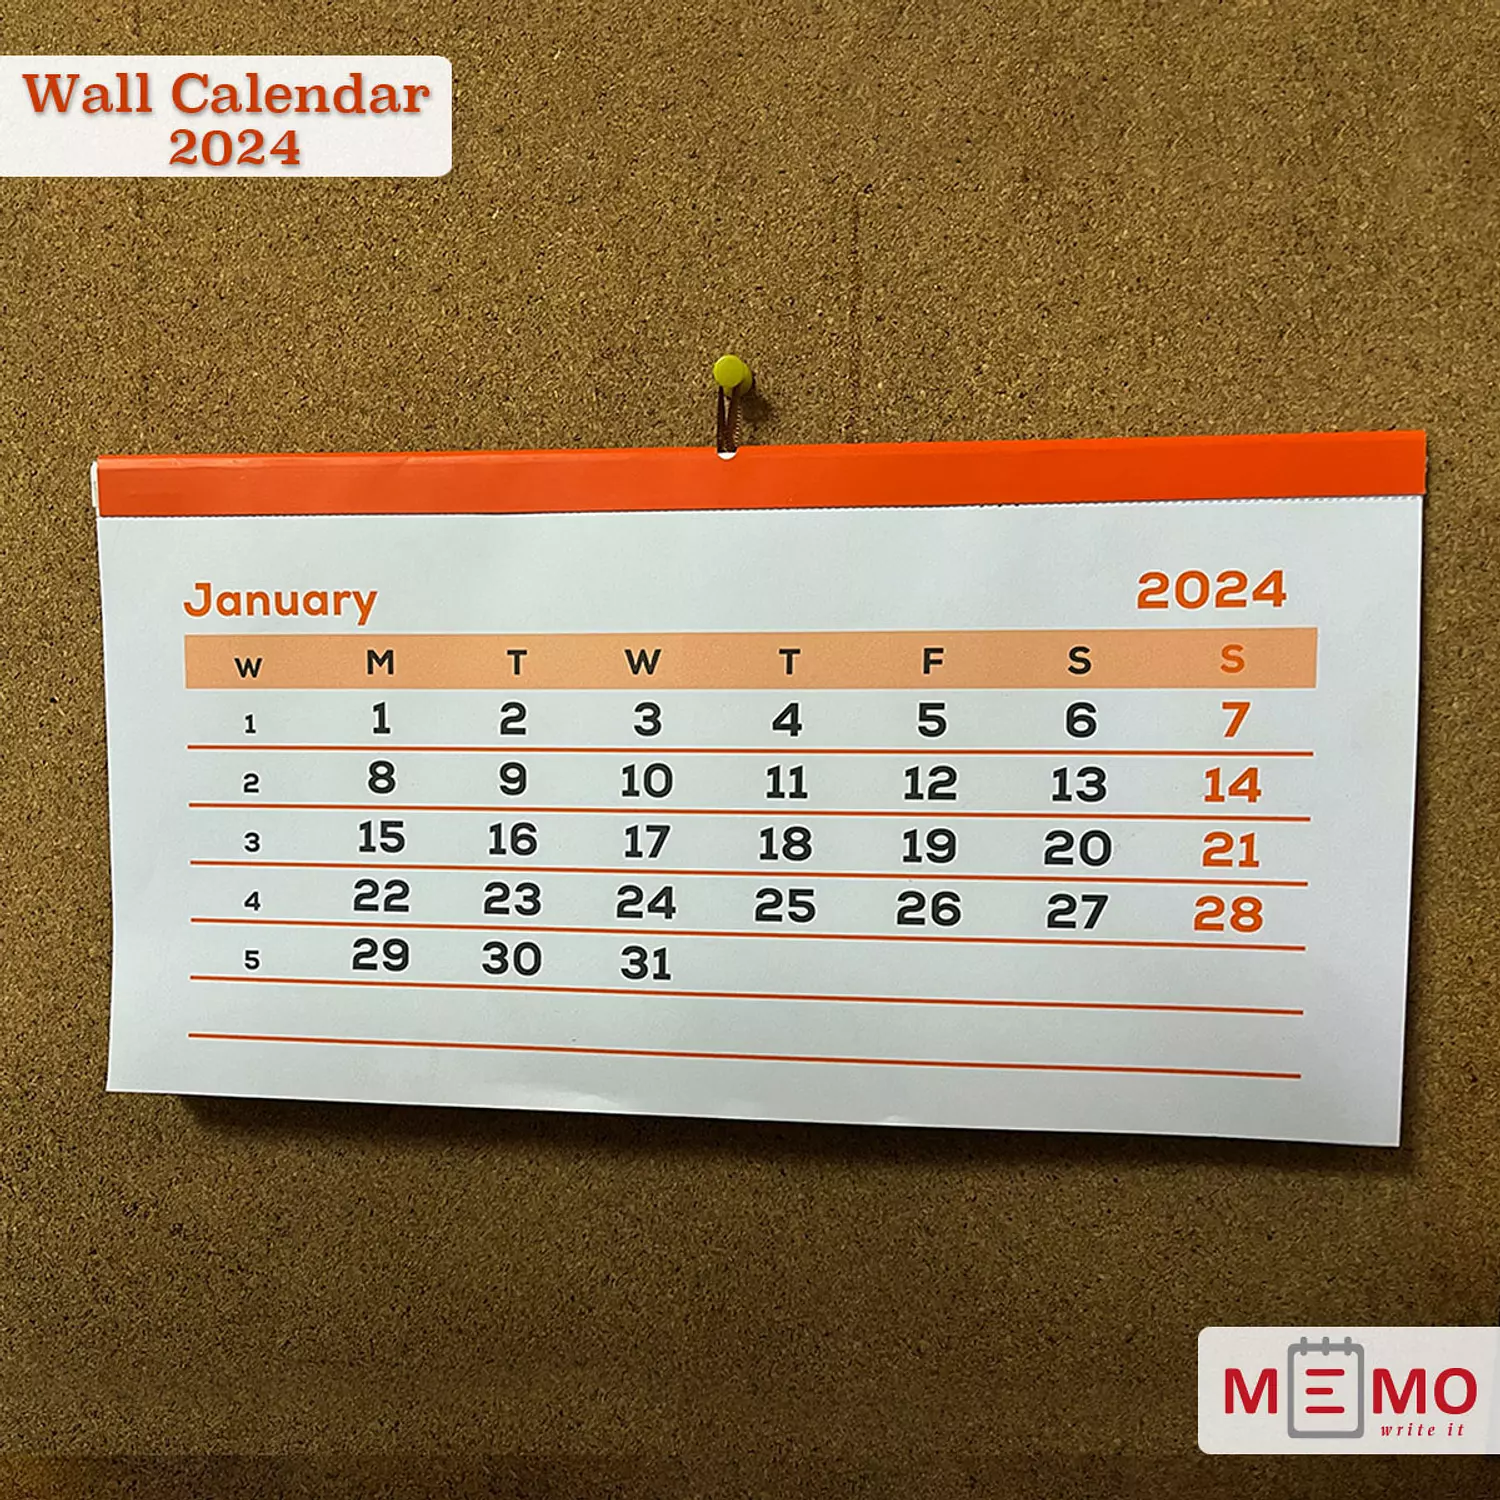 Memo Wall calendar 2024 3